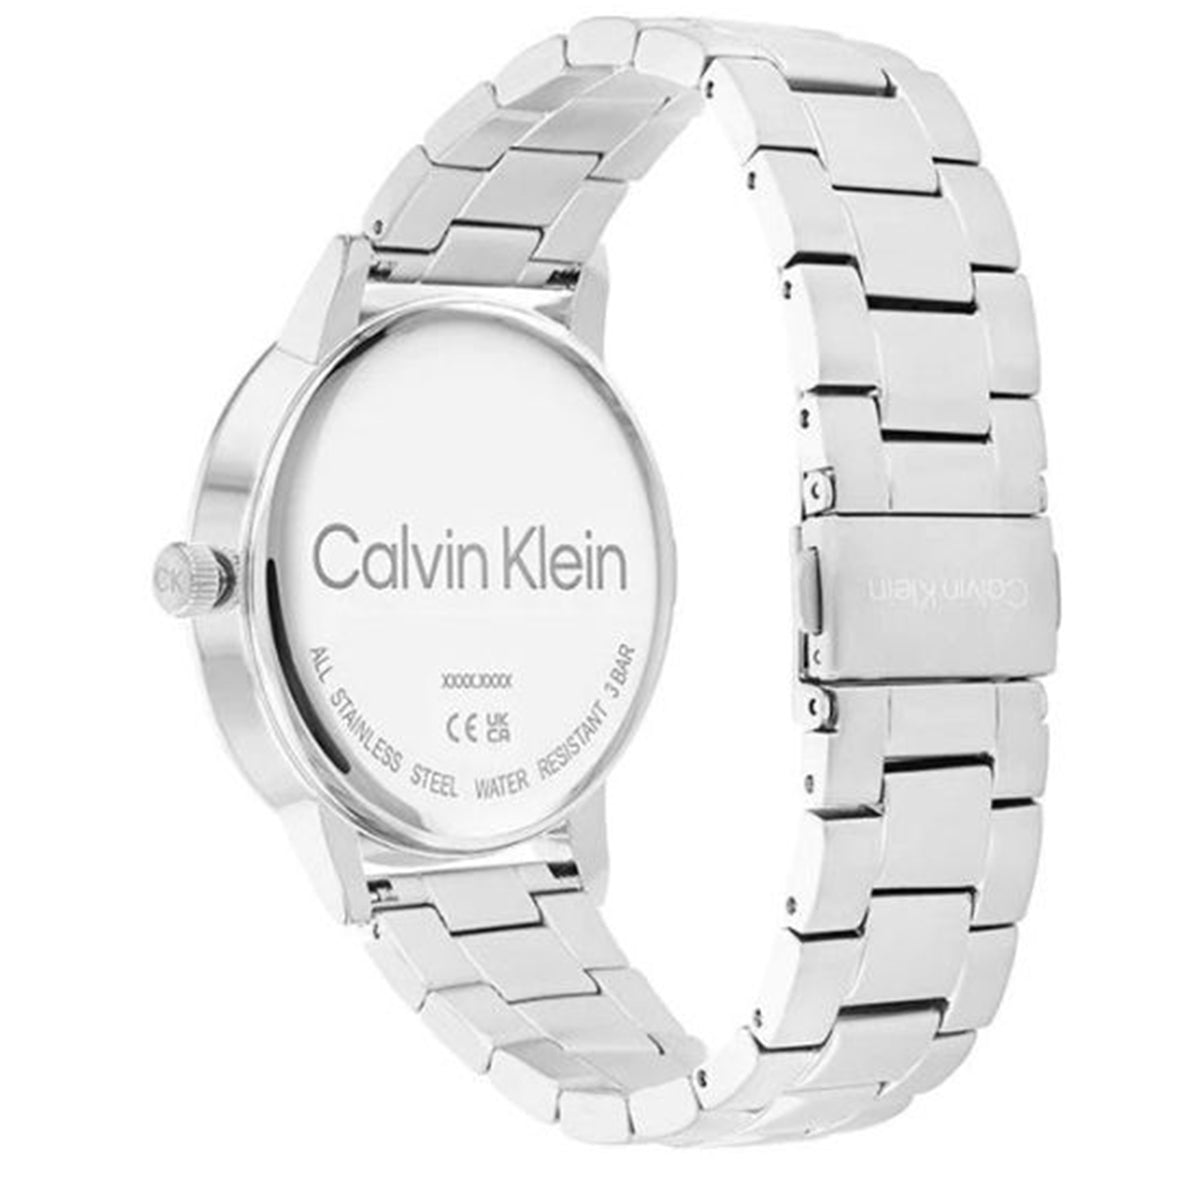 Calvin Klein - Linked - 25200053